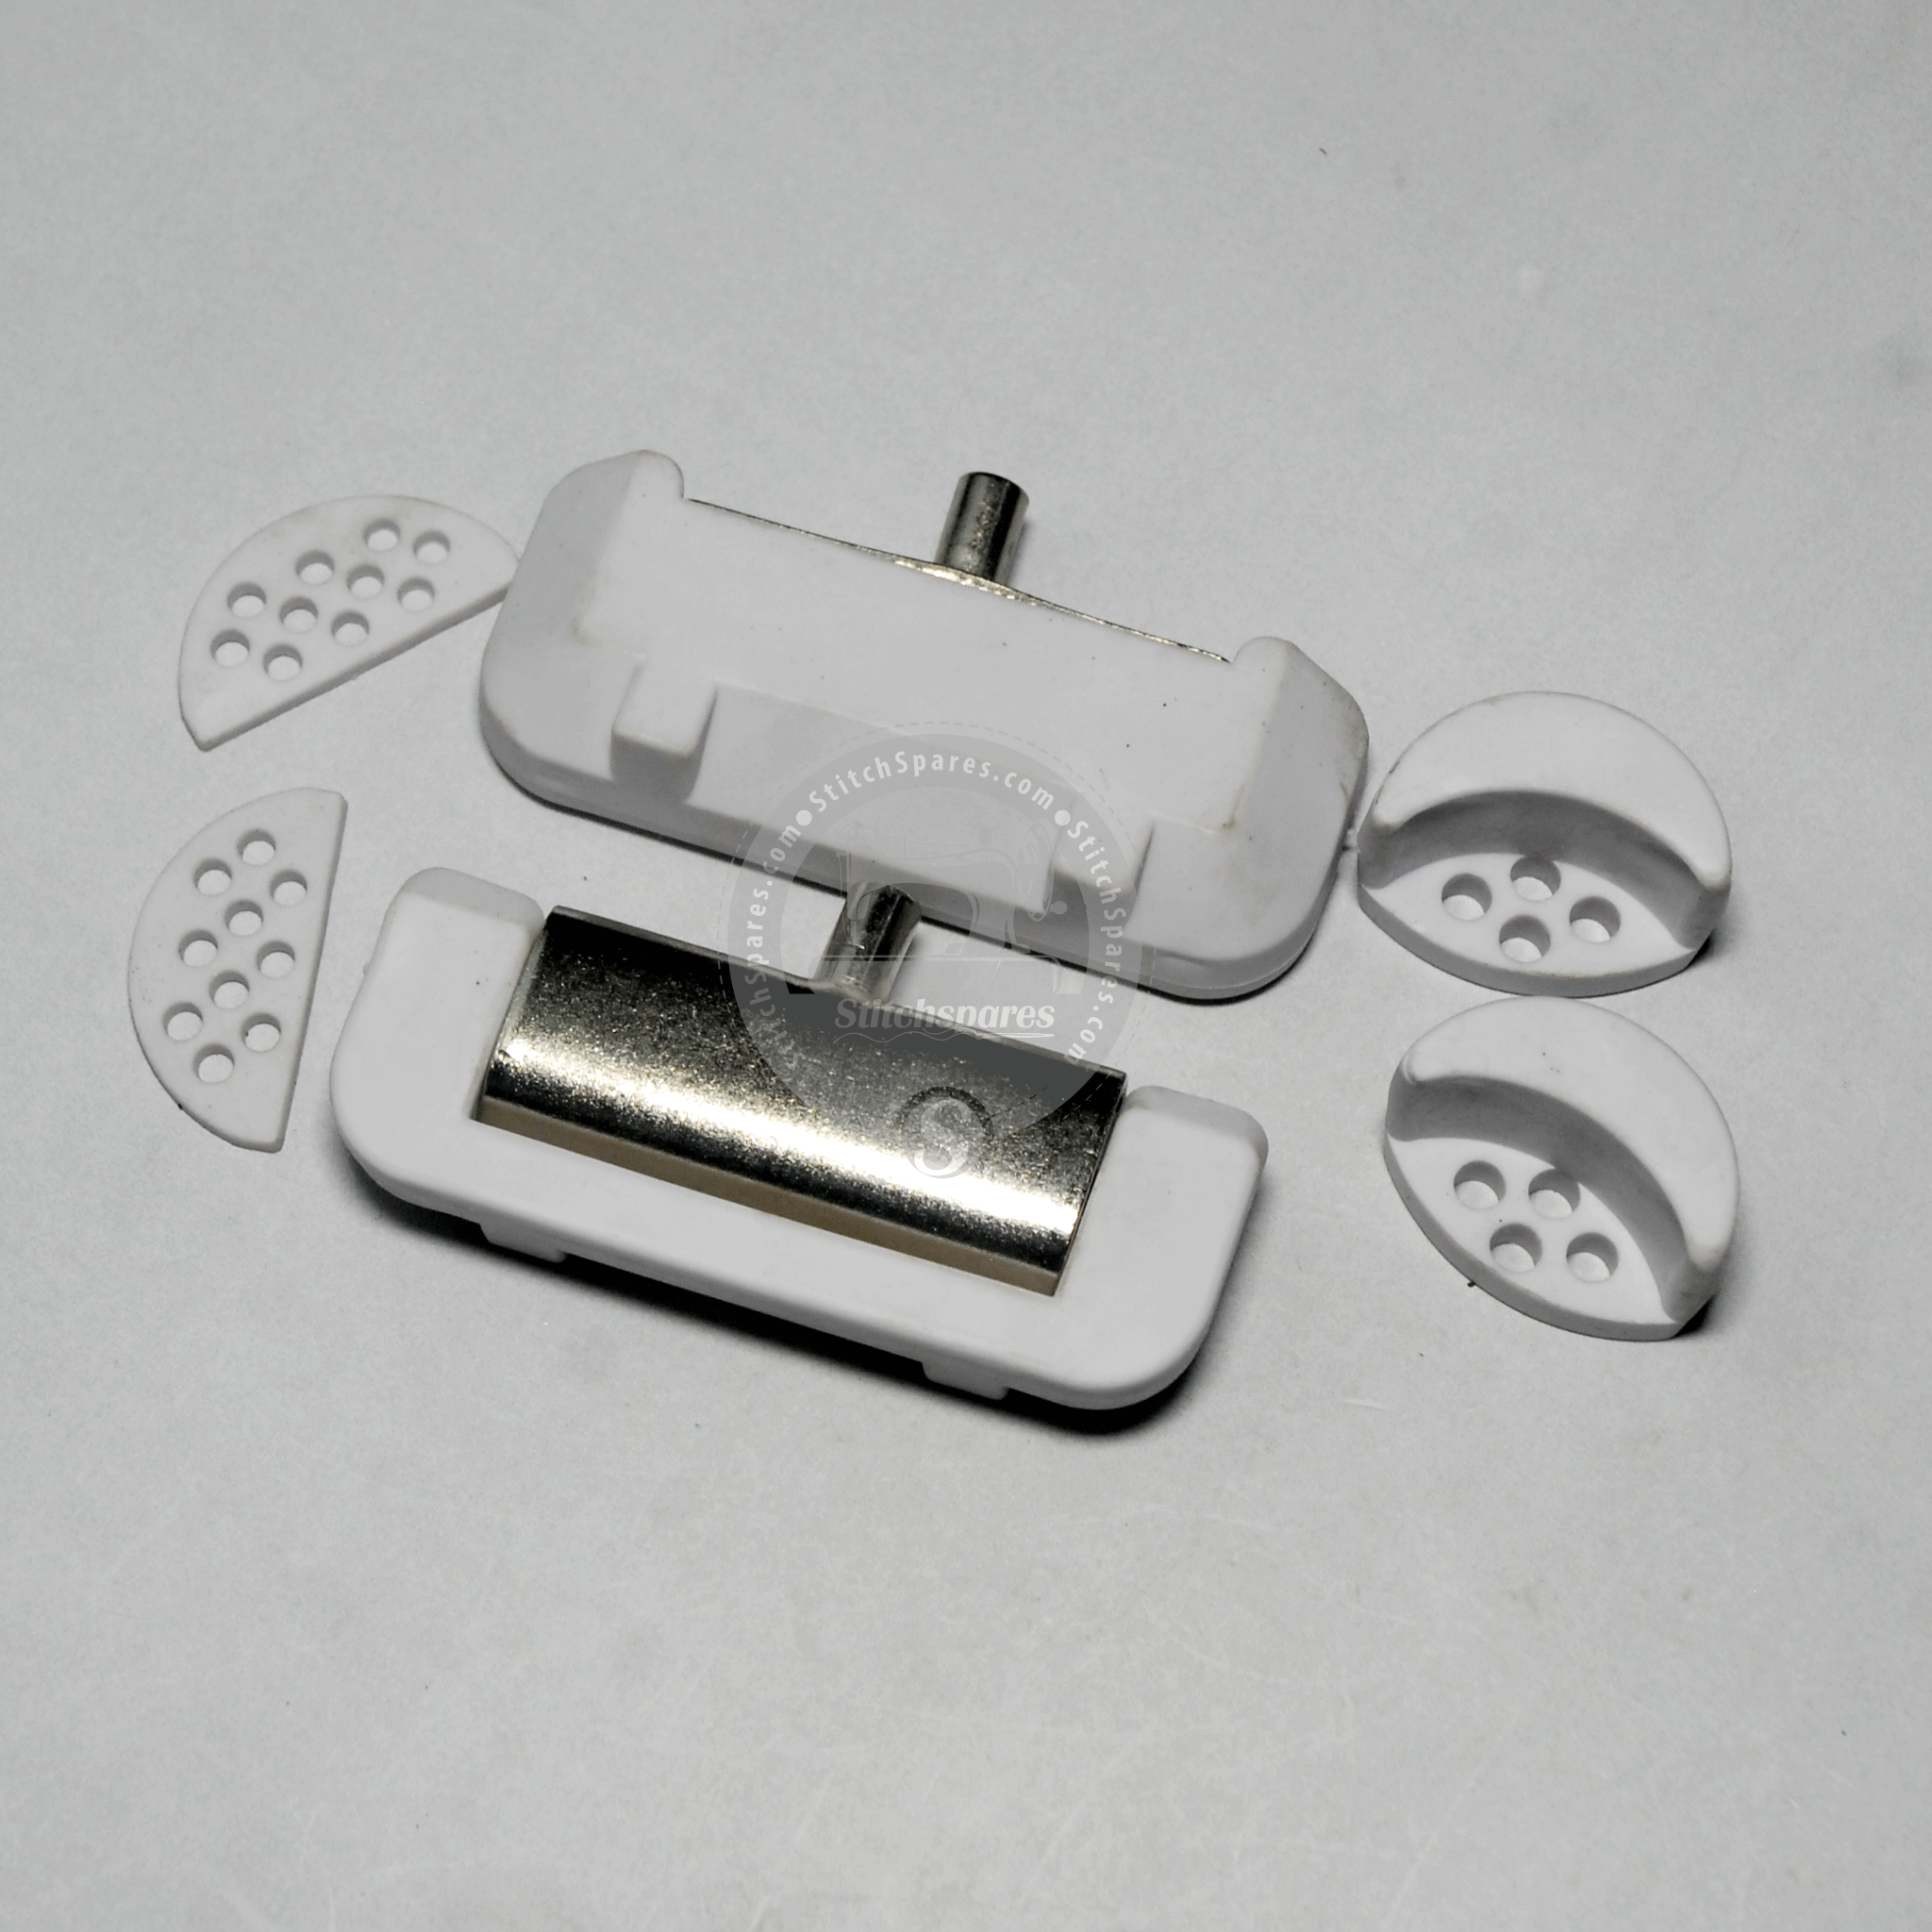 Scharnierset Single Needle Lock-Stitch Machine